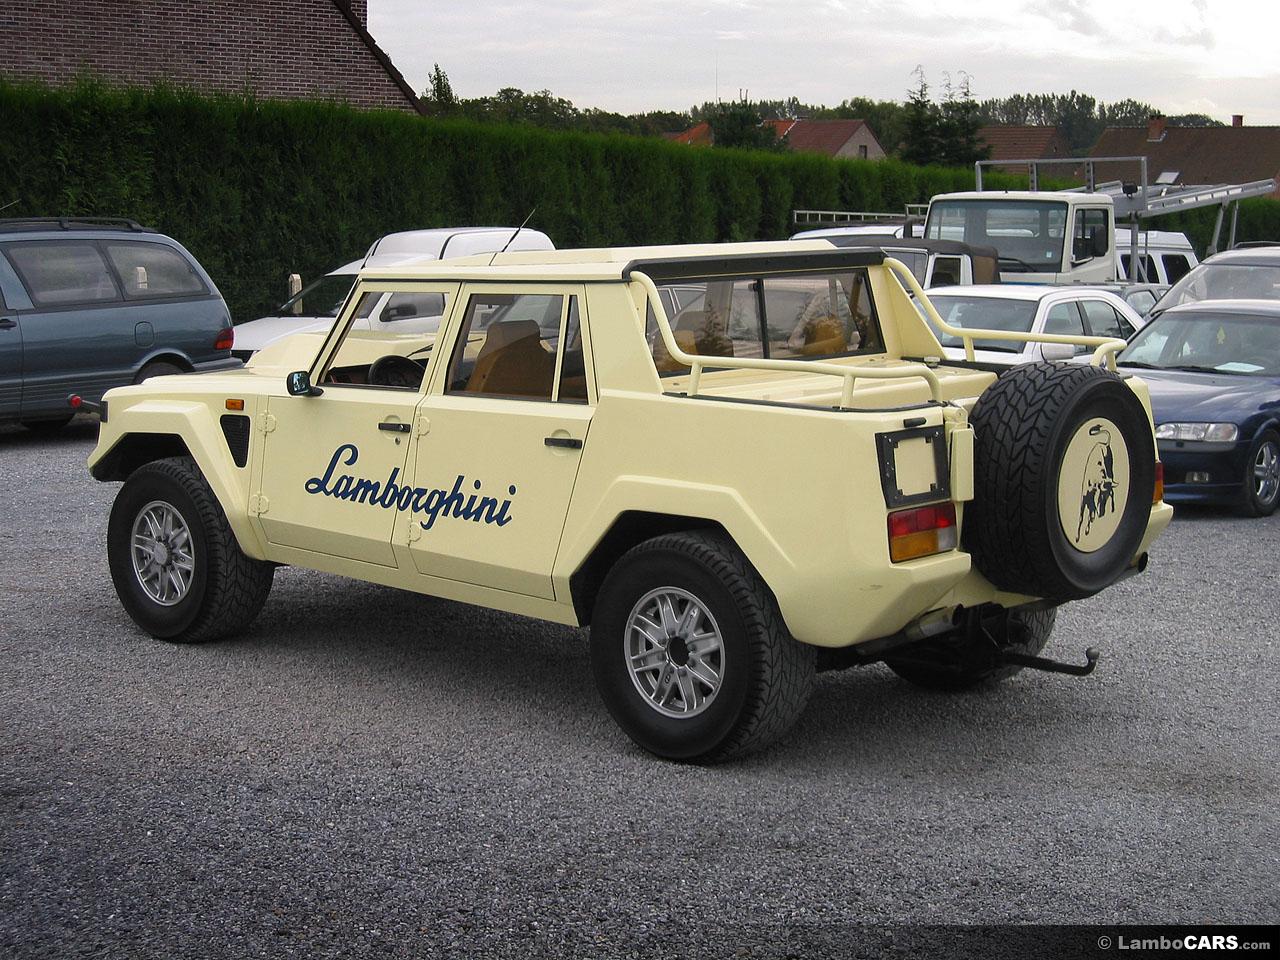 Lamborghini lm002 52